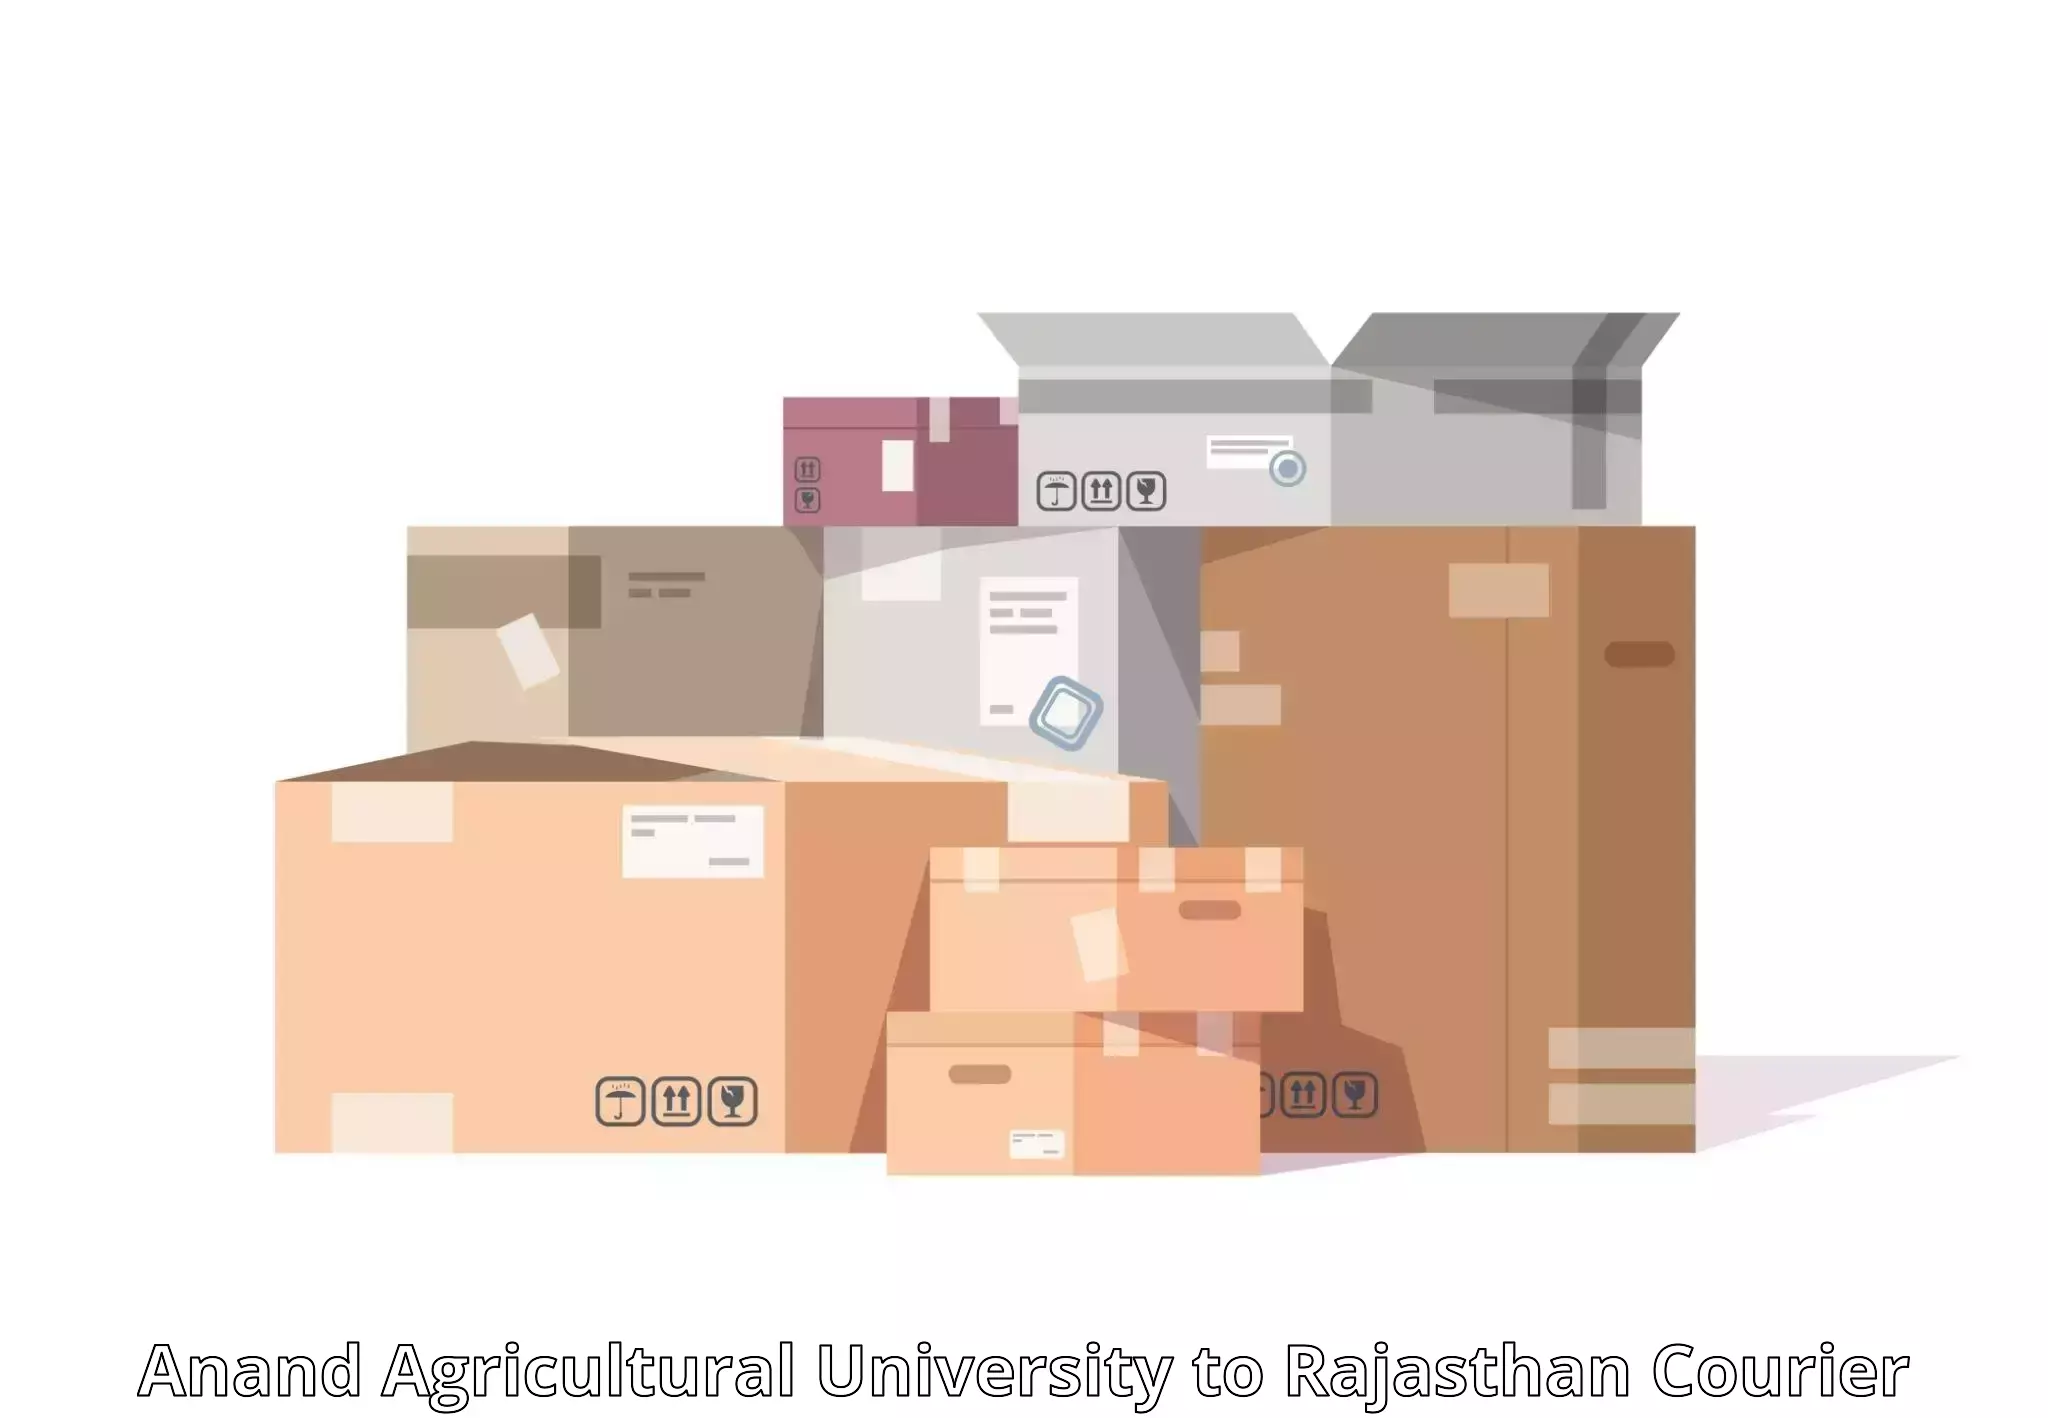 Efficient parcel transport Anand Agricultural University to Hanumangarh